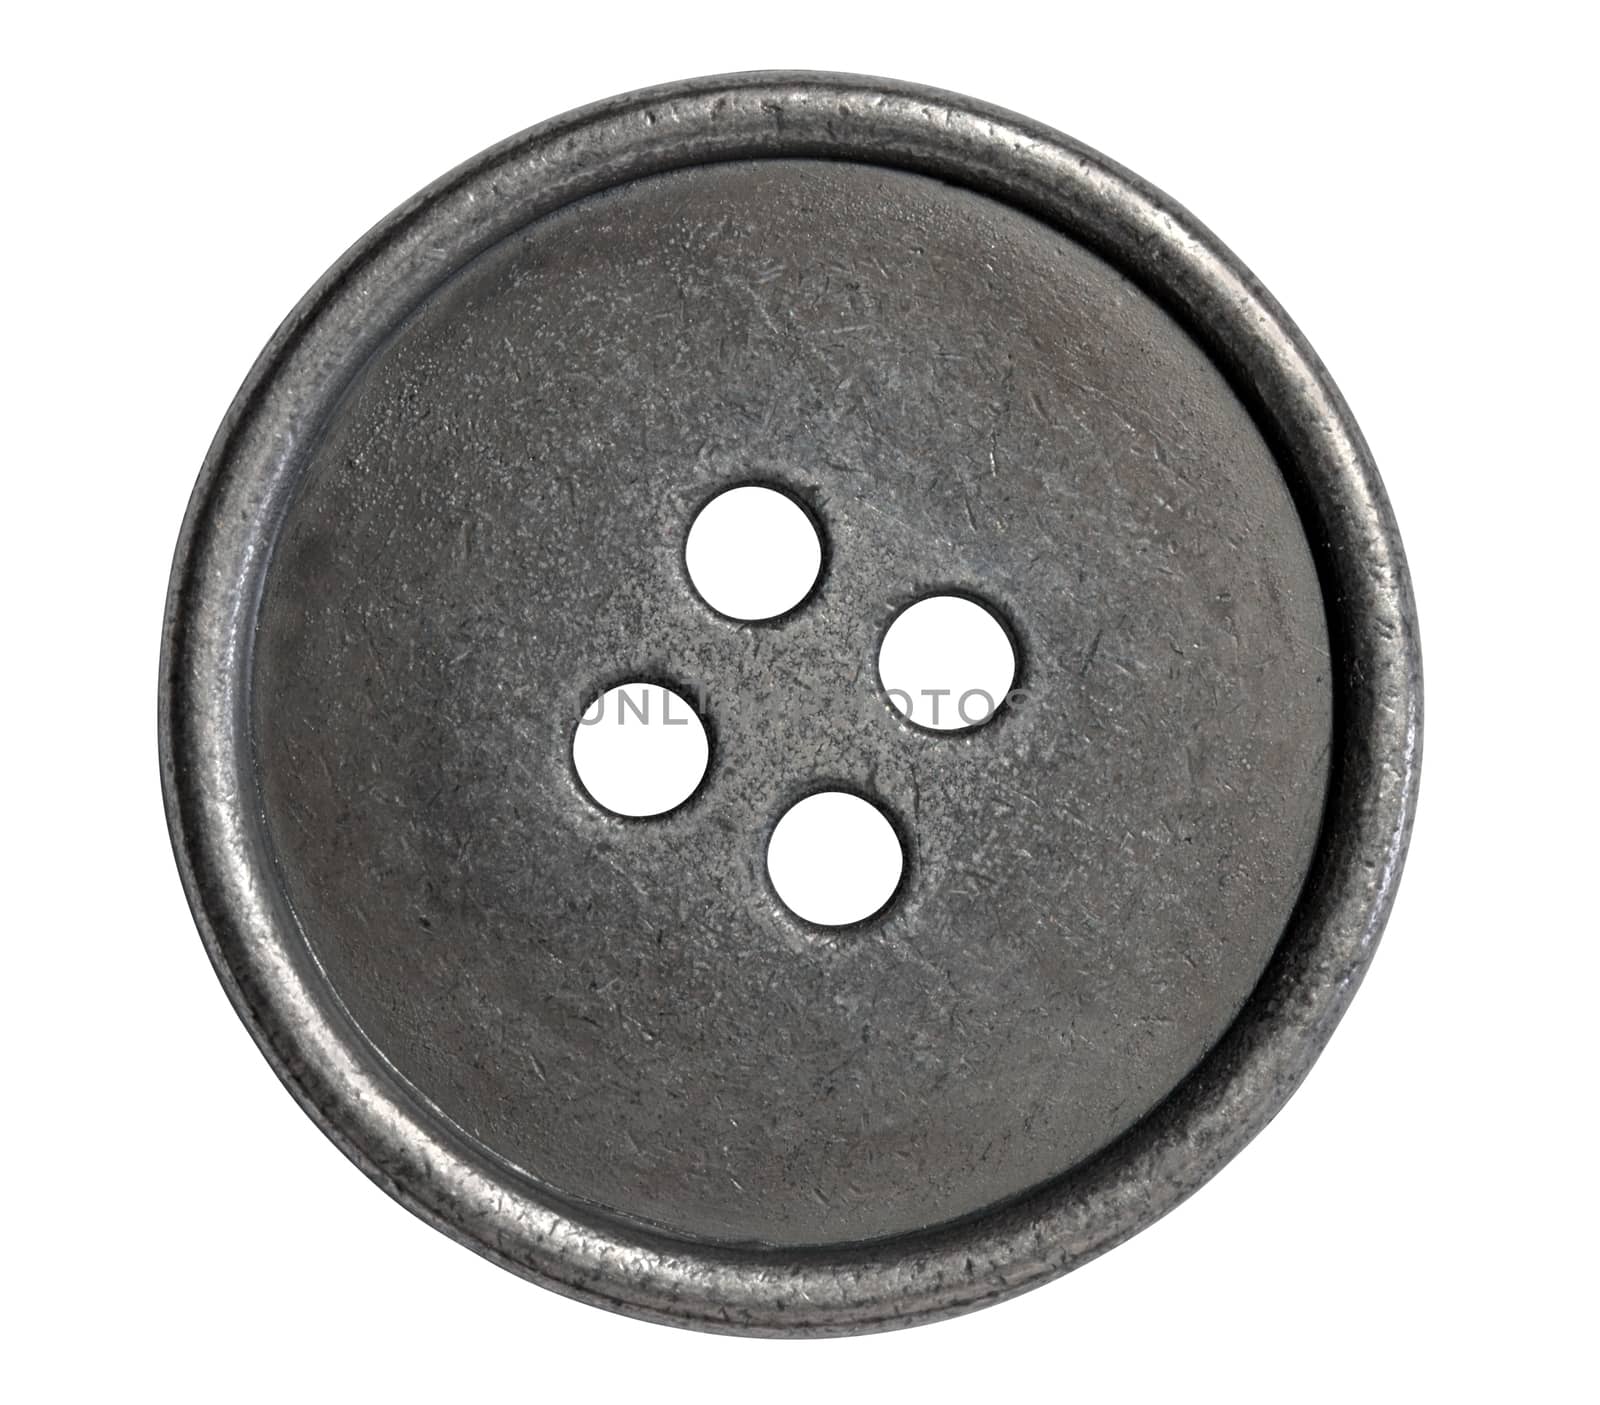 Metal button by Vectorex